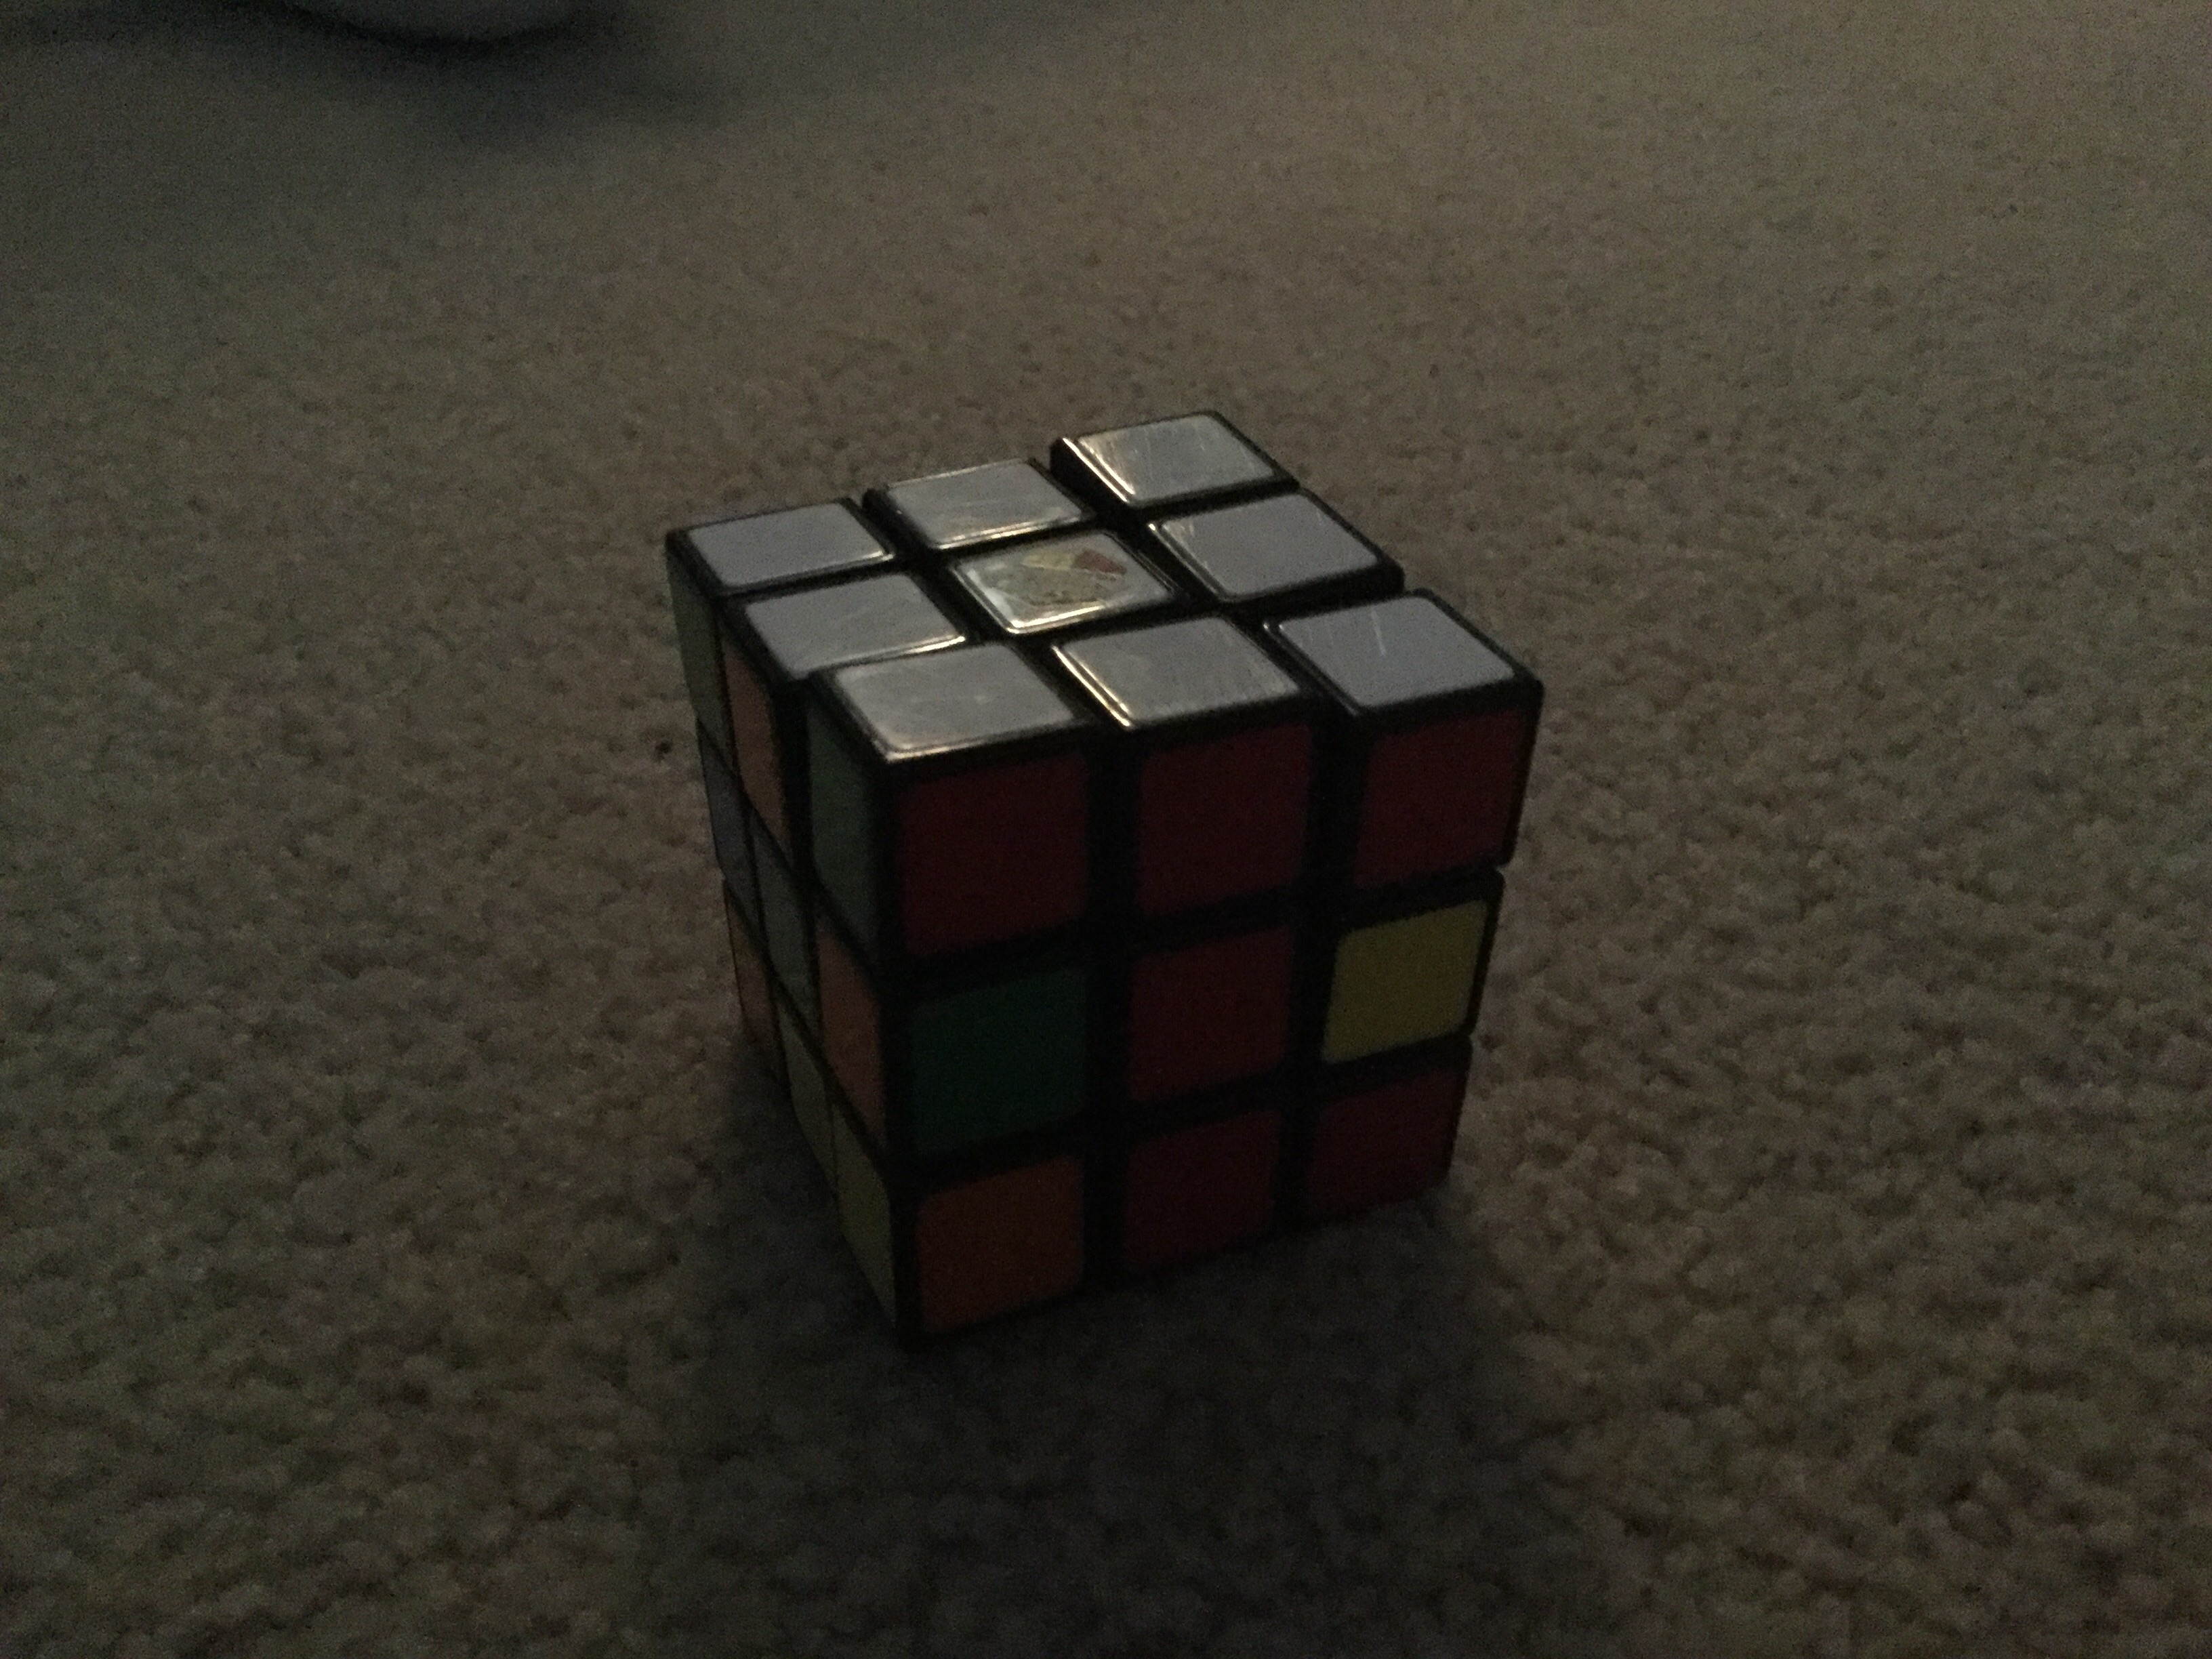 Rubix Cube | Real life object show Wiki | Fandom